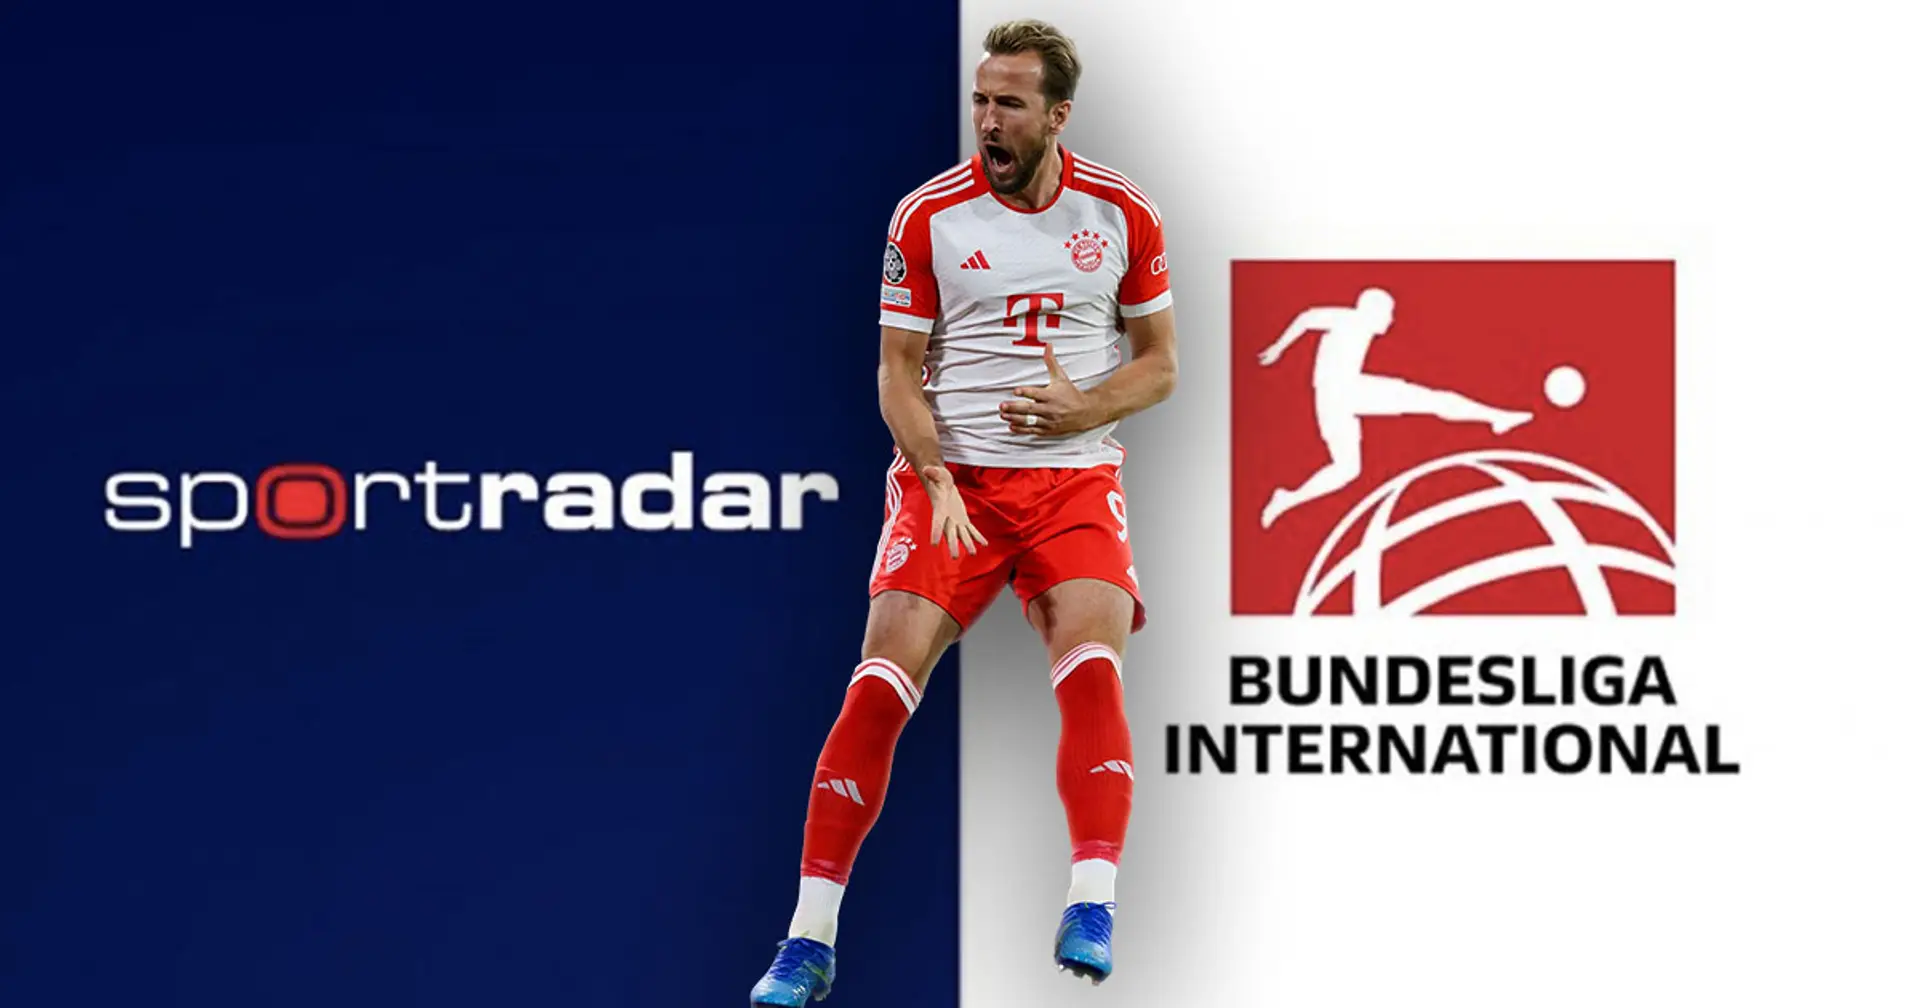 La Bundesliga annuncia un prolungamento della partnership con Sportradar